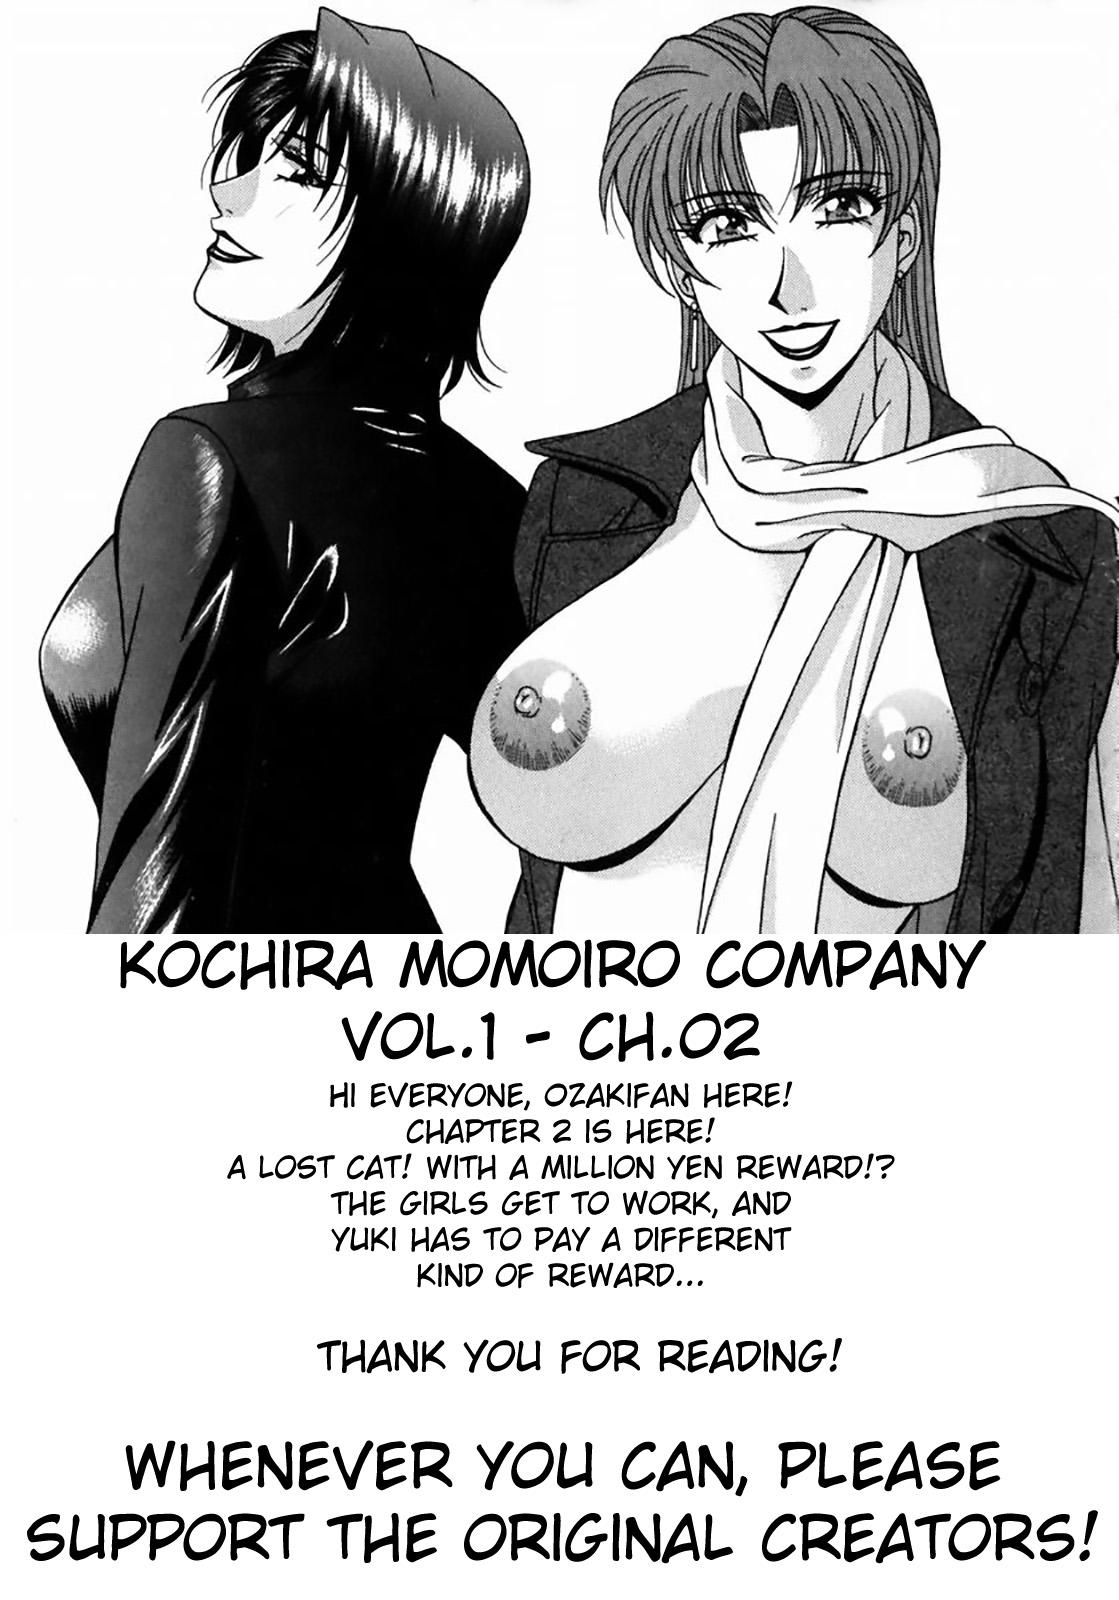 Kochira Momoiro Company Vol. 1 Ch. 1-9 47